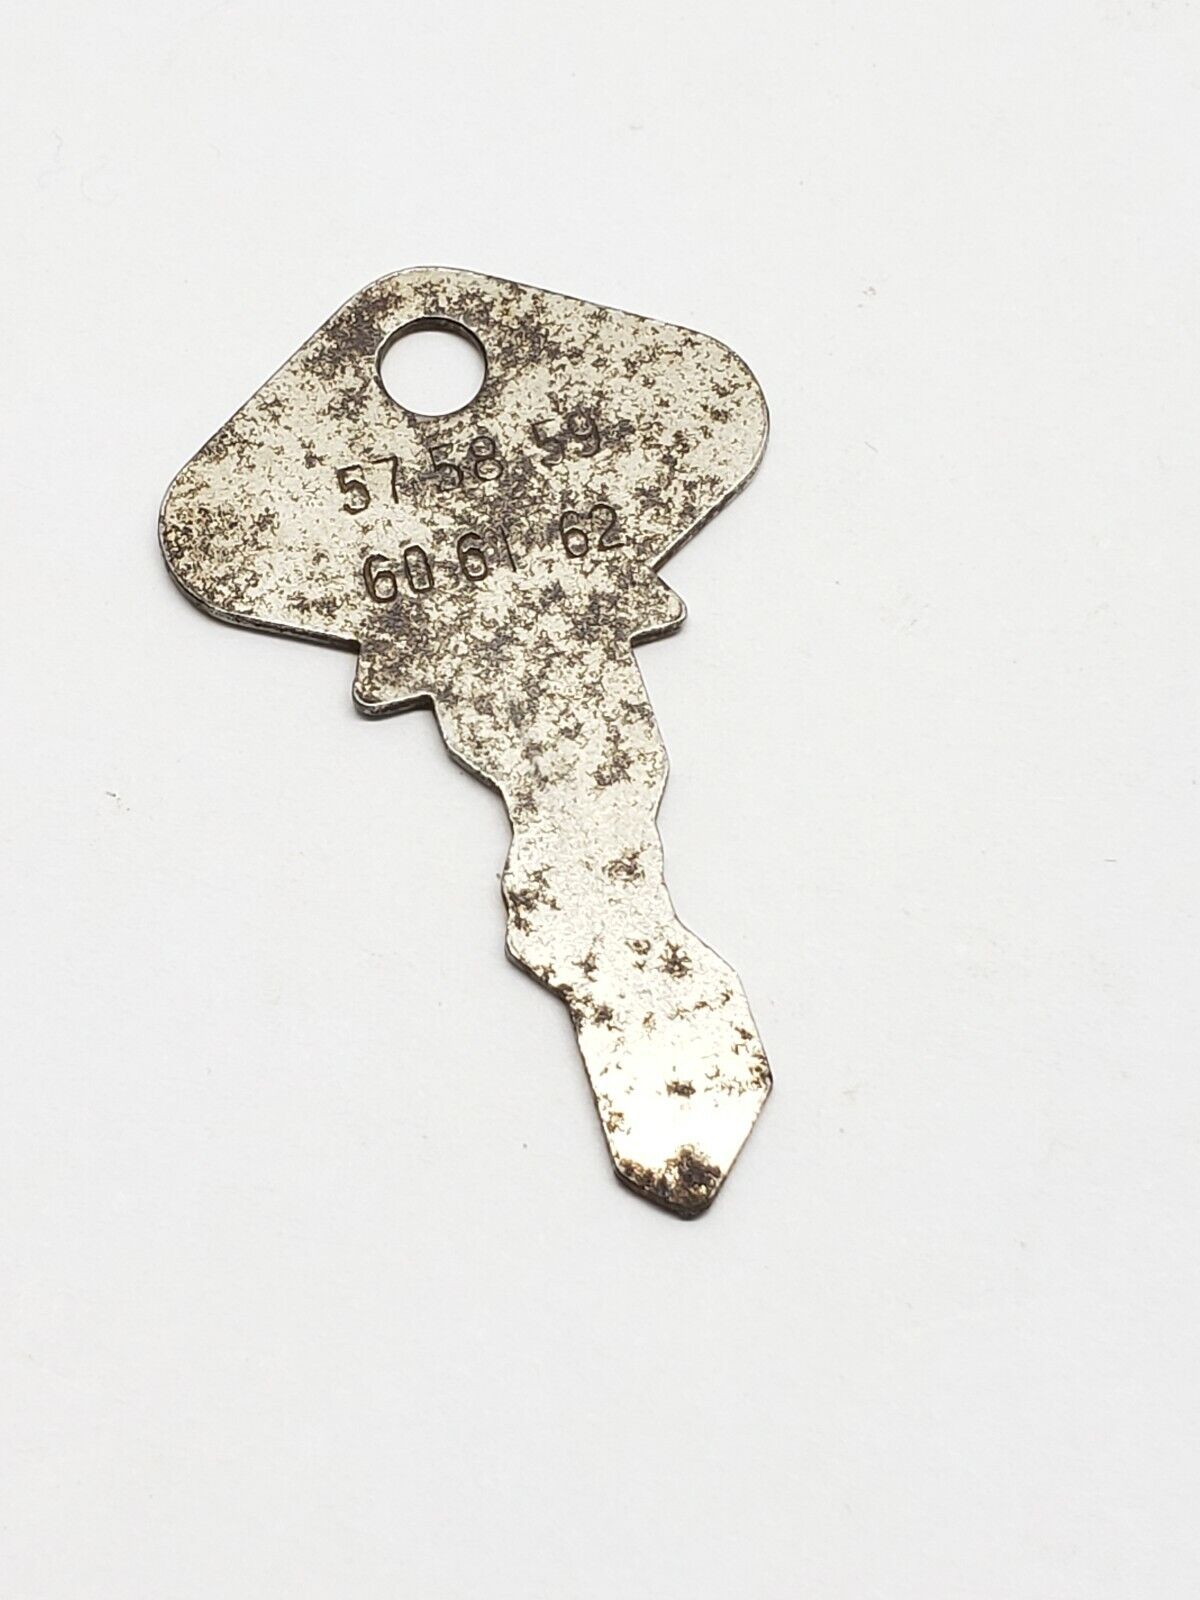 Ford automotive test key for models 57-62, locksmith